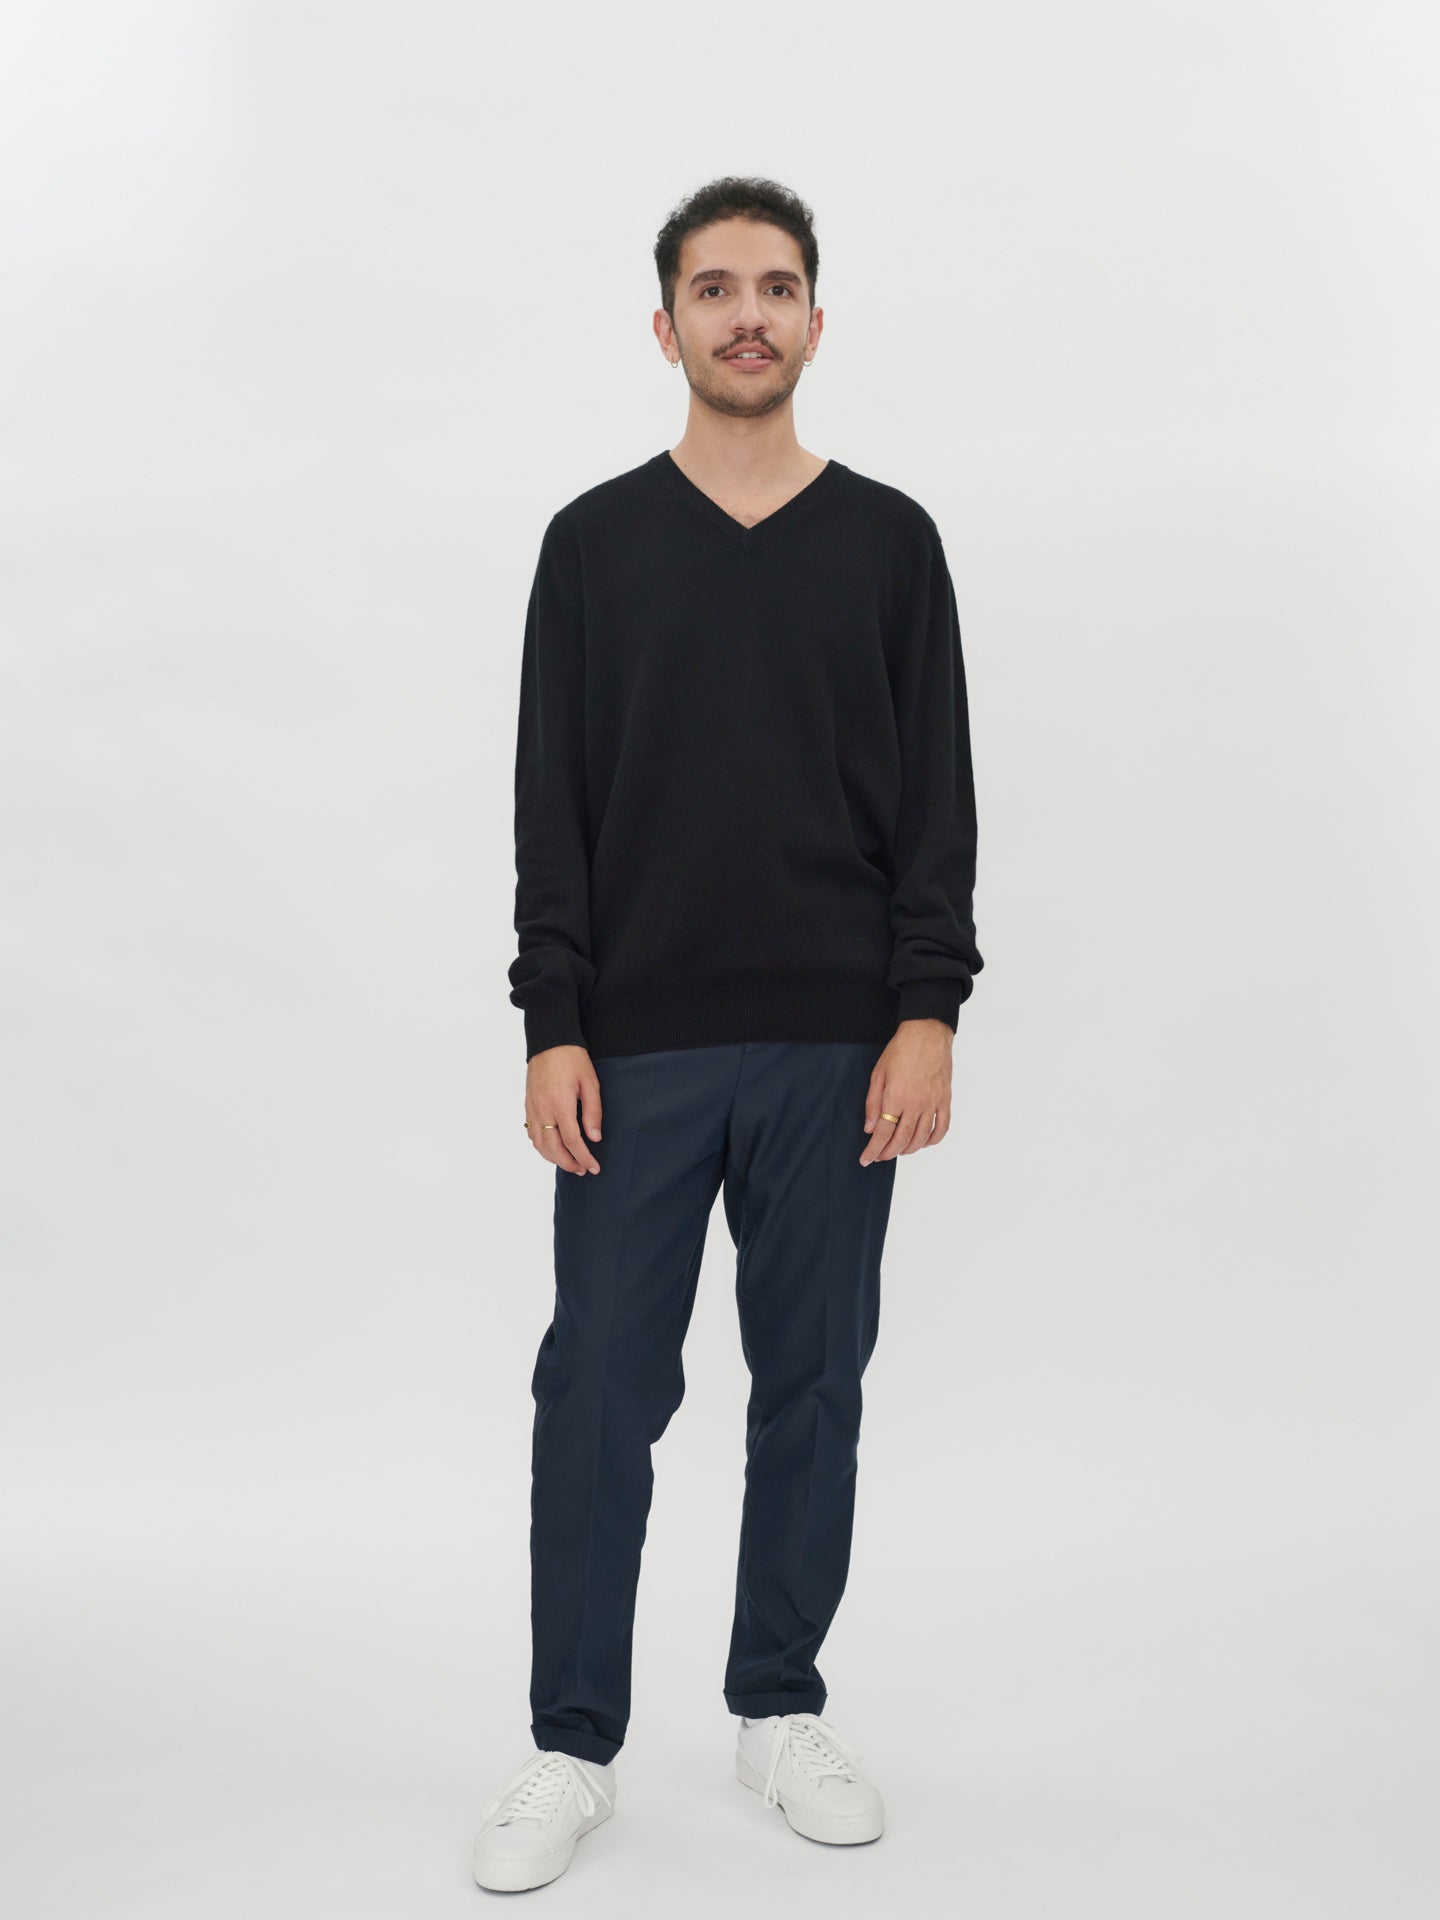 Men's Cashmere Basic V-Neck Sweater Black - Gobi Cashmere